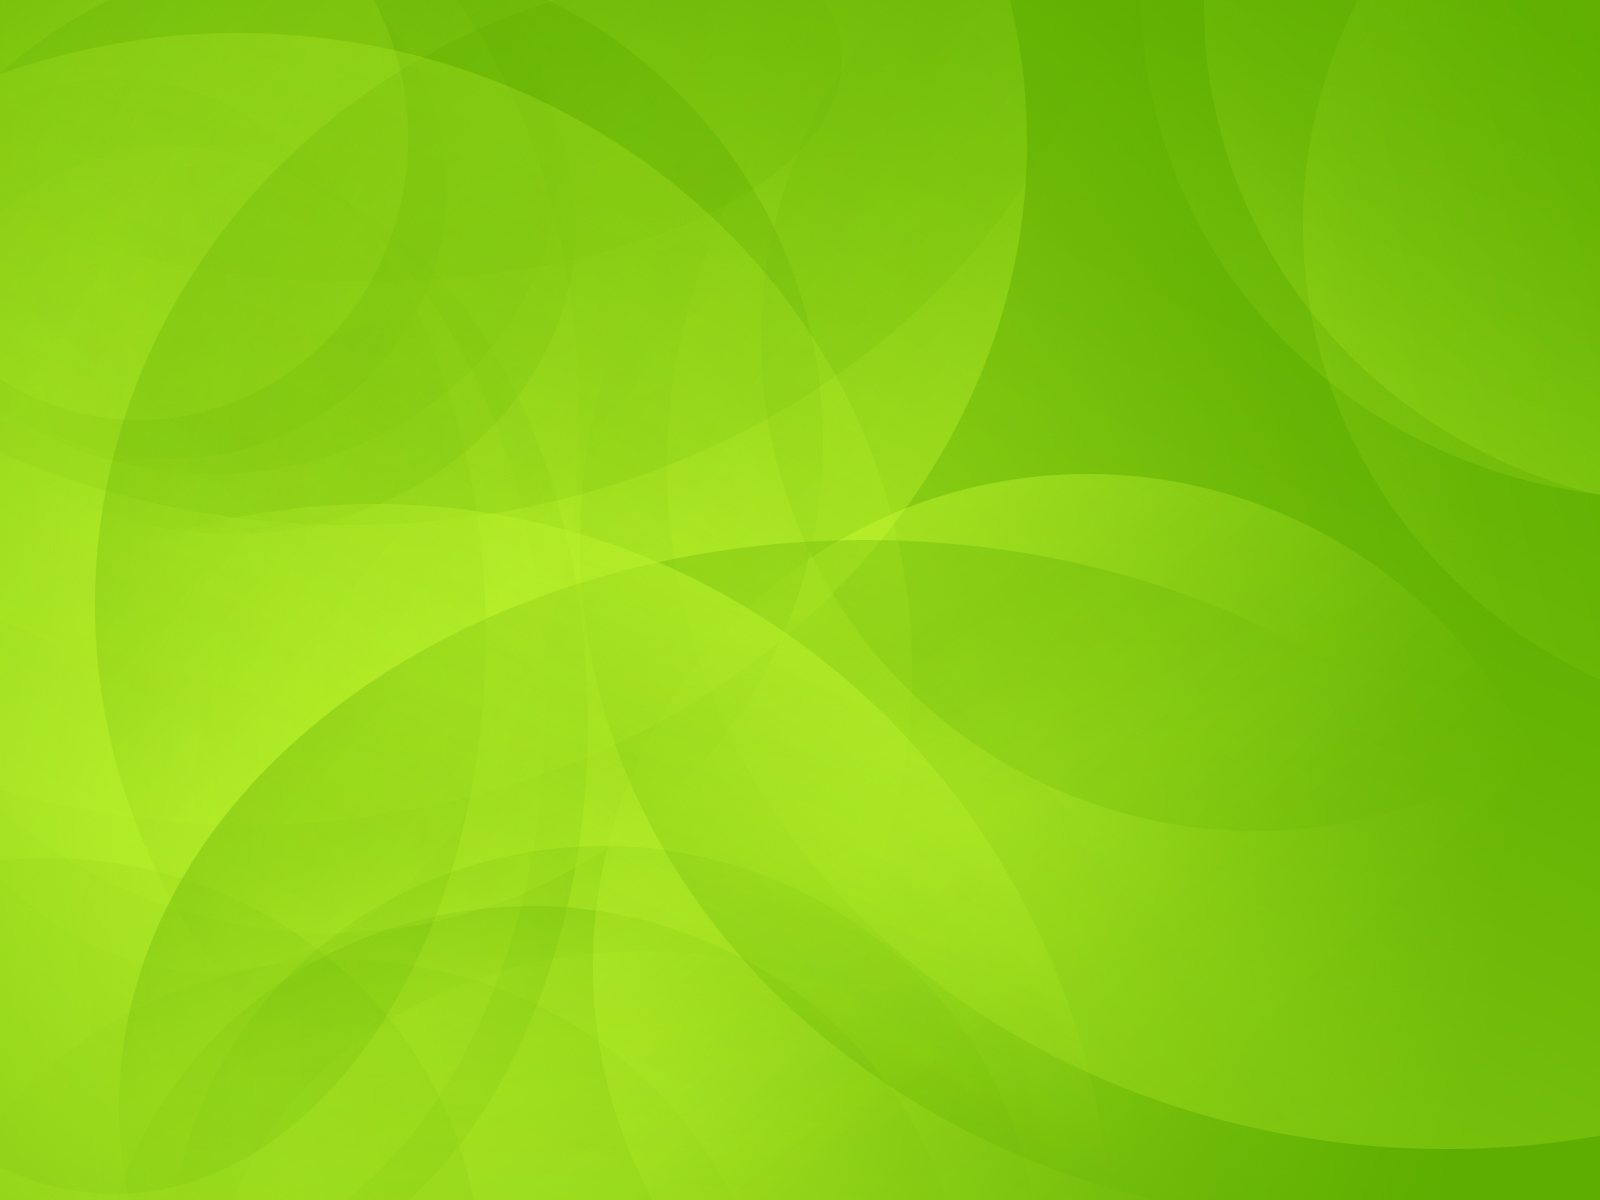 Ubuntu Swirls Green by PrimoTurbo on DeviantArt